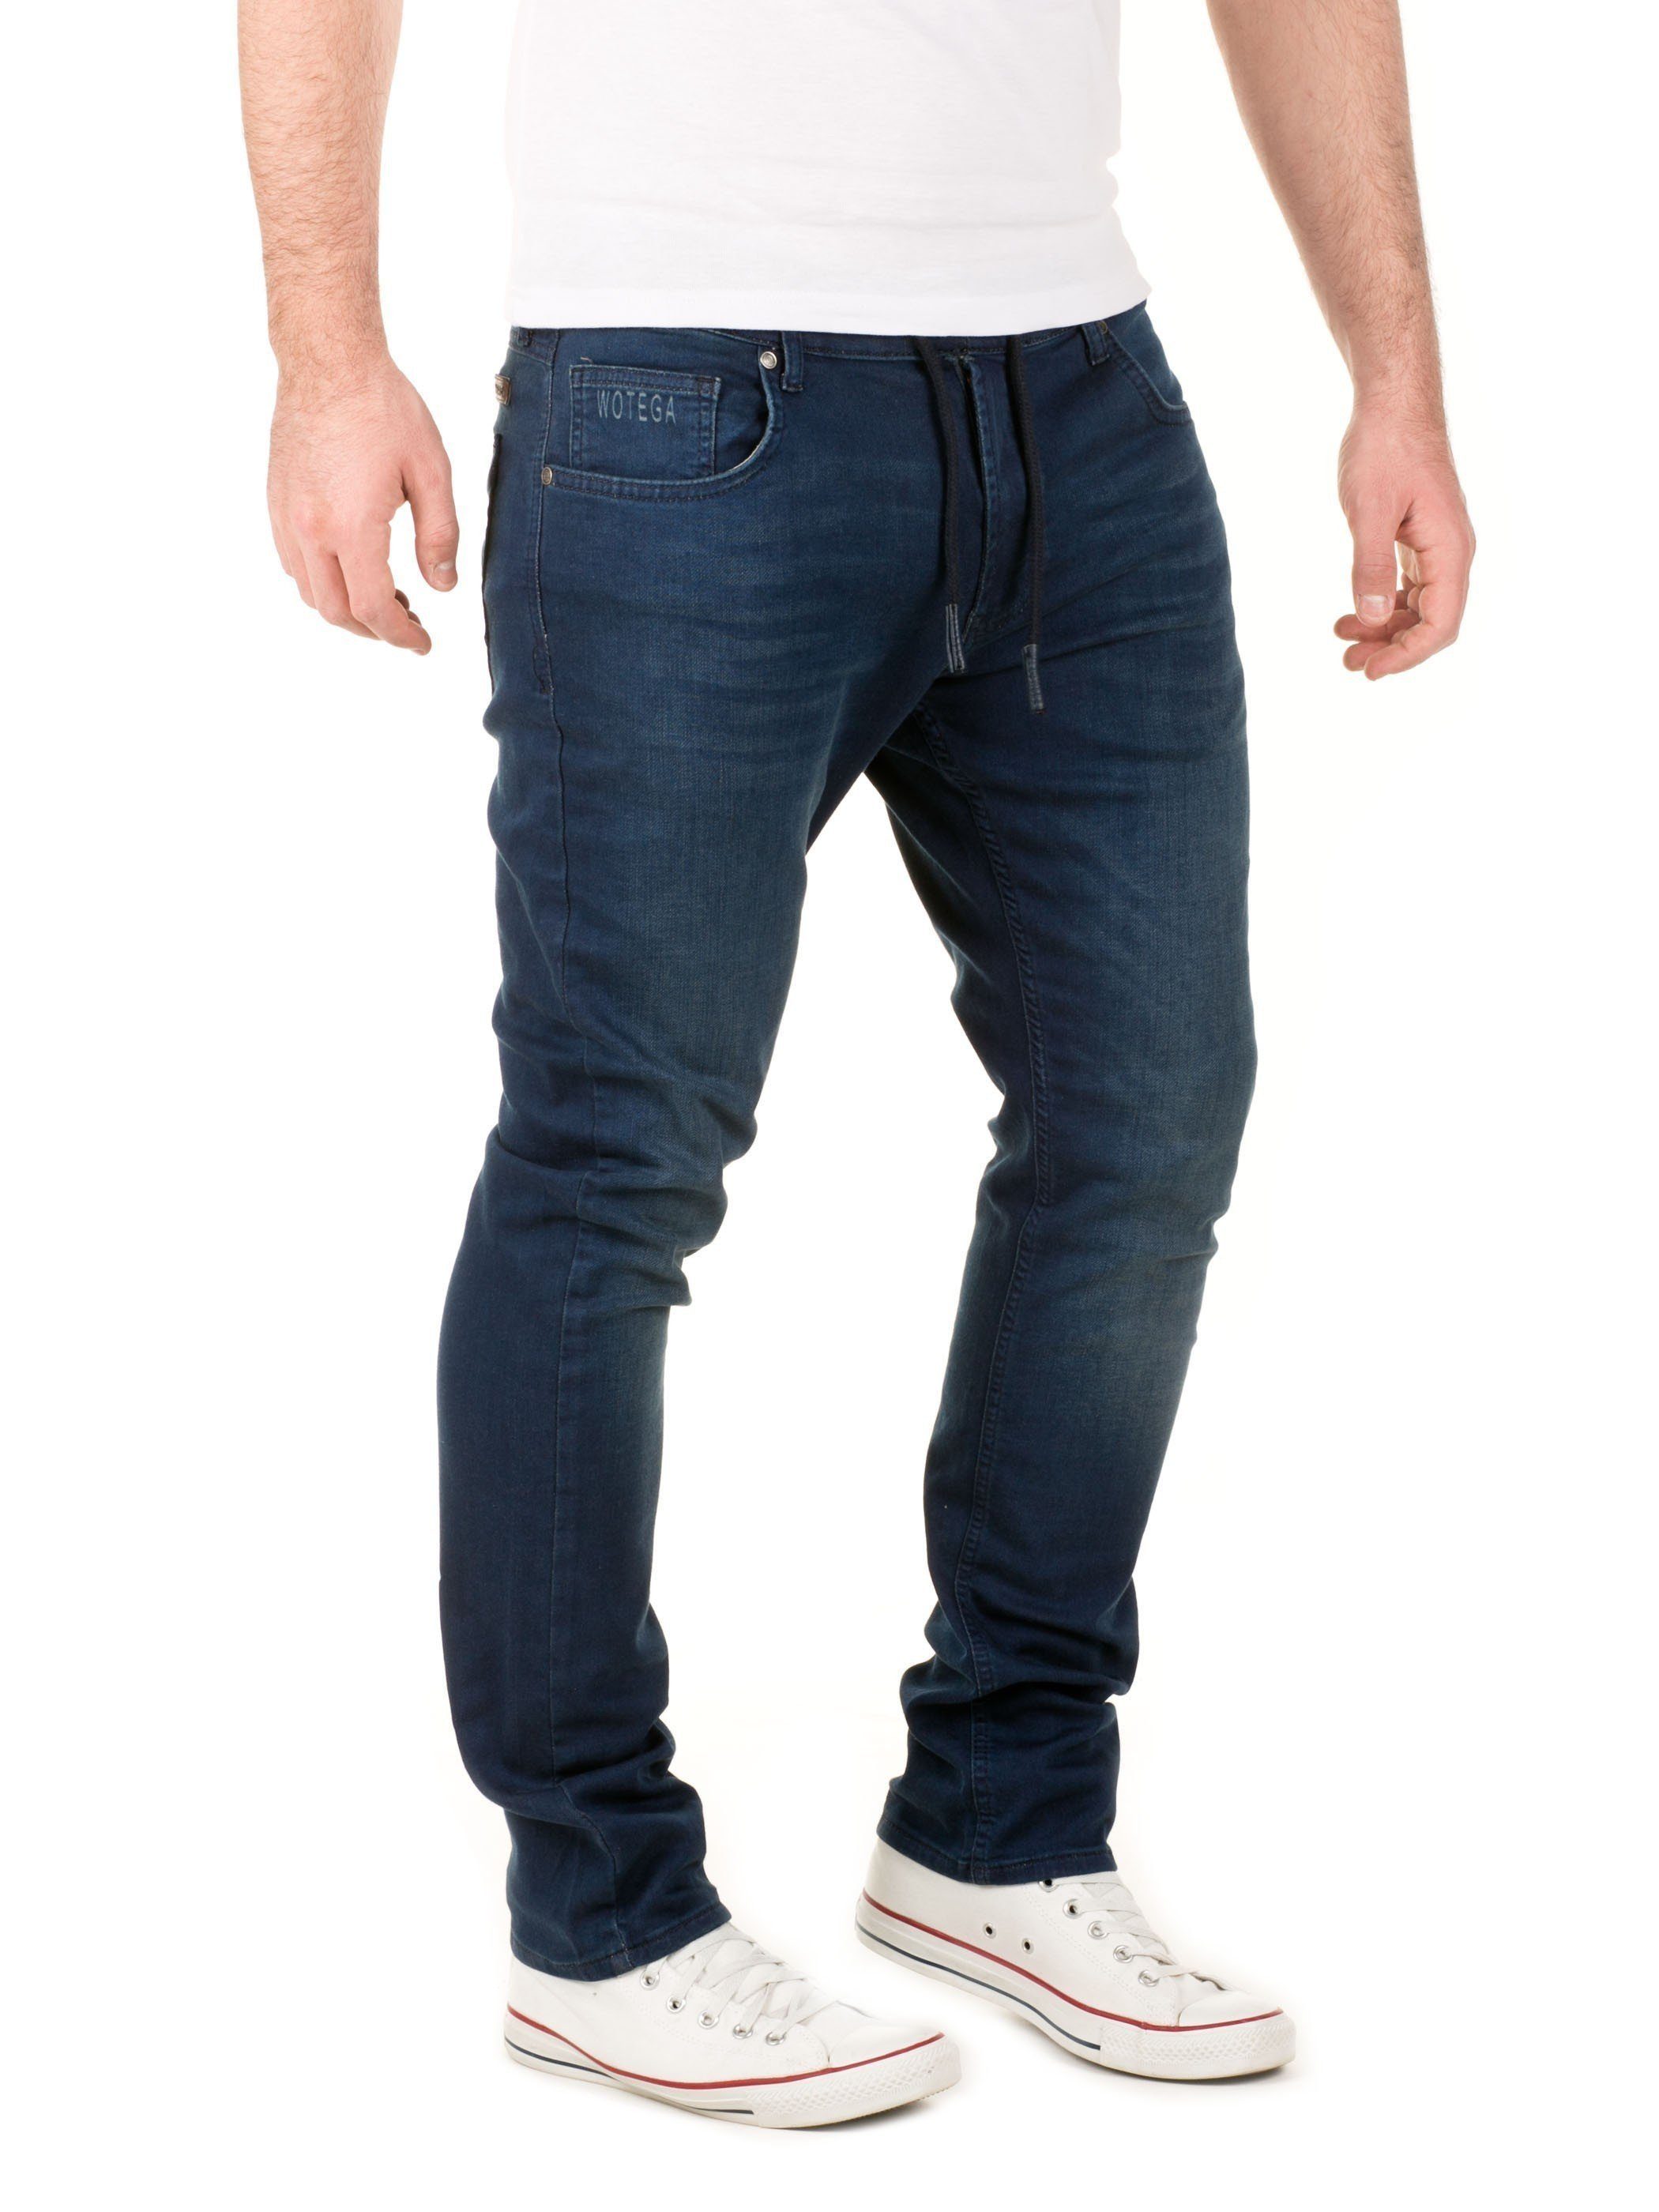 Herren (Dress Hose Slim-fit-Jeans Jeans-Look WOTEGA 3R4024) Blues Noah in Jogginghose Sweathosen Dunkelblau Jogging Jeans Stretch Denim in